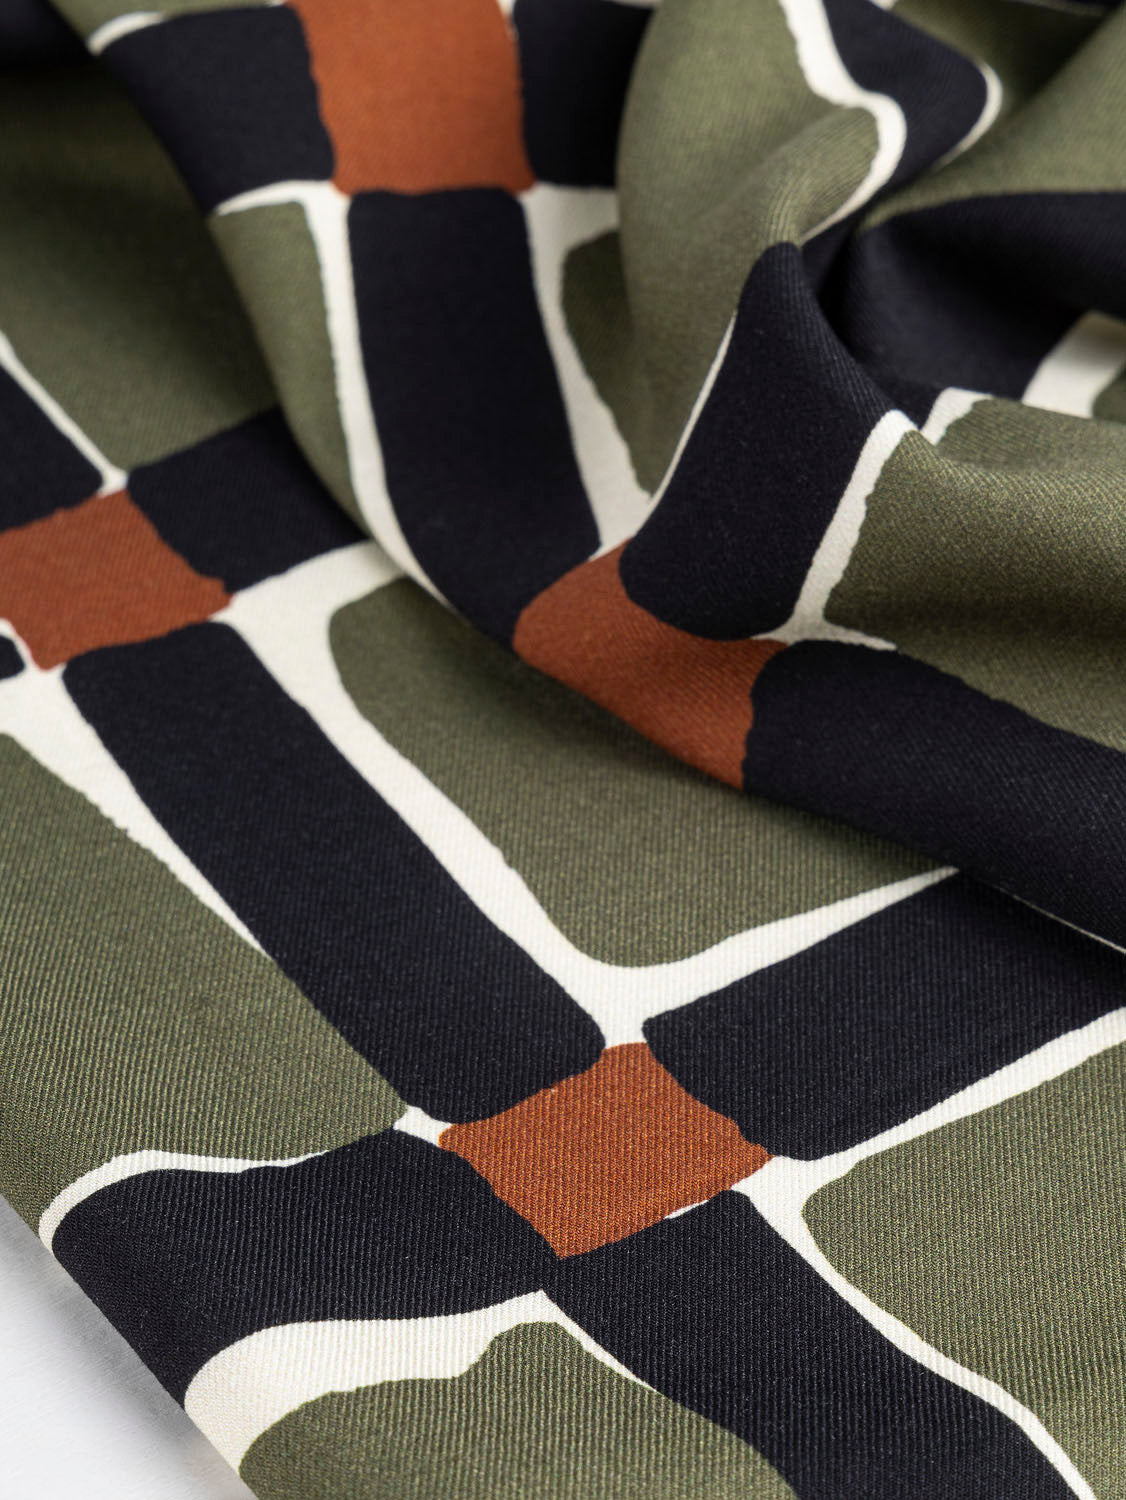 Wool Fabric By The Yard - F - Maroon, Cream, & Green Plaid